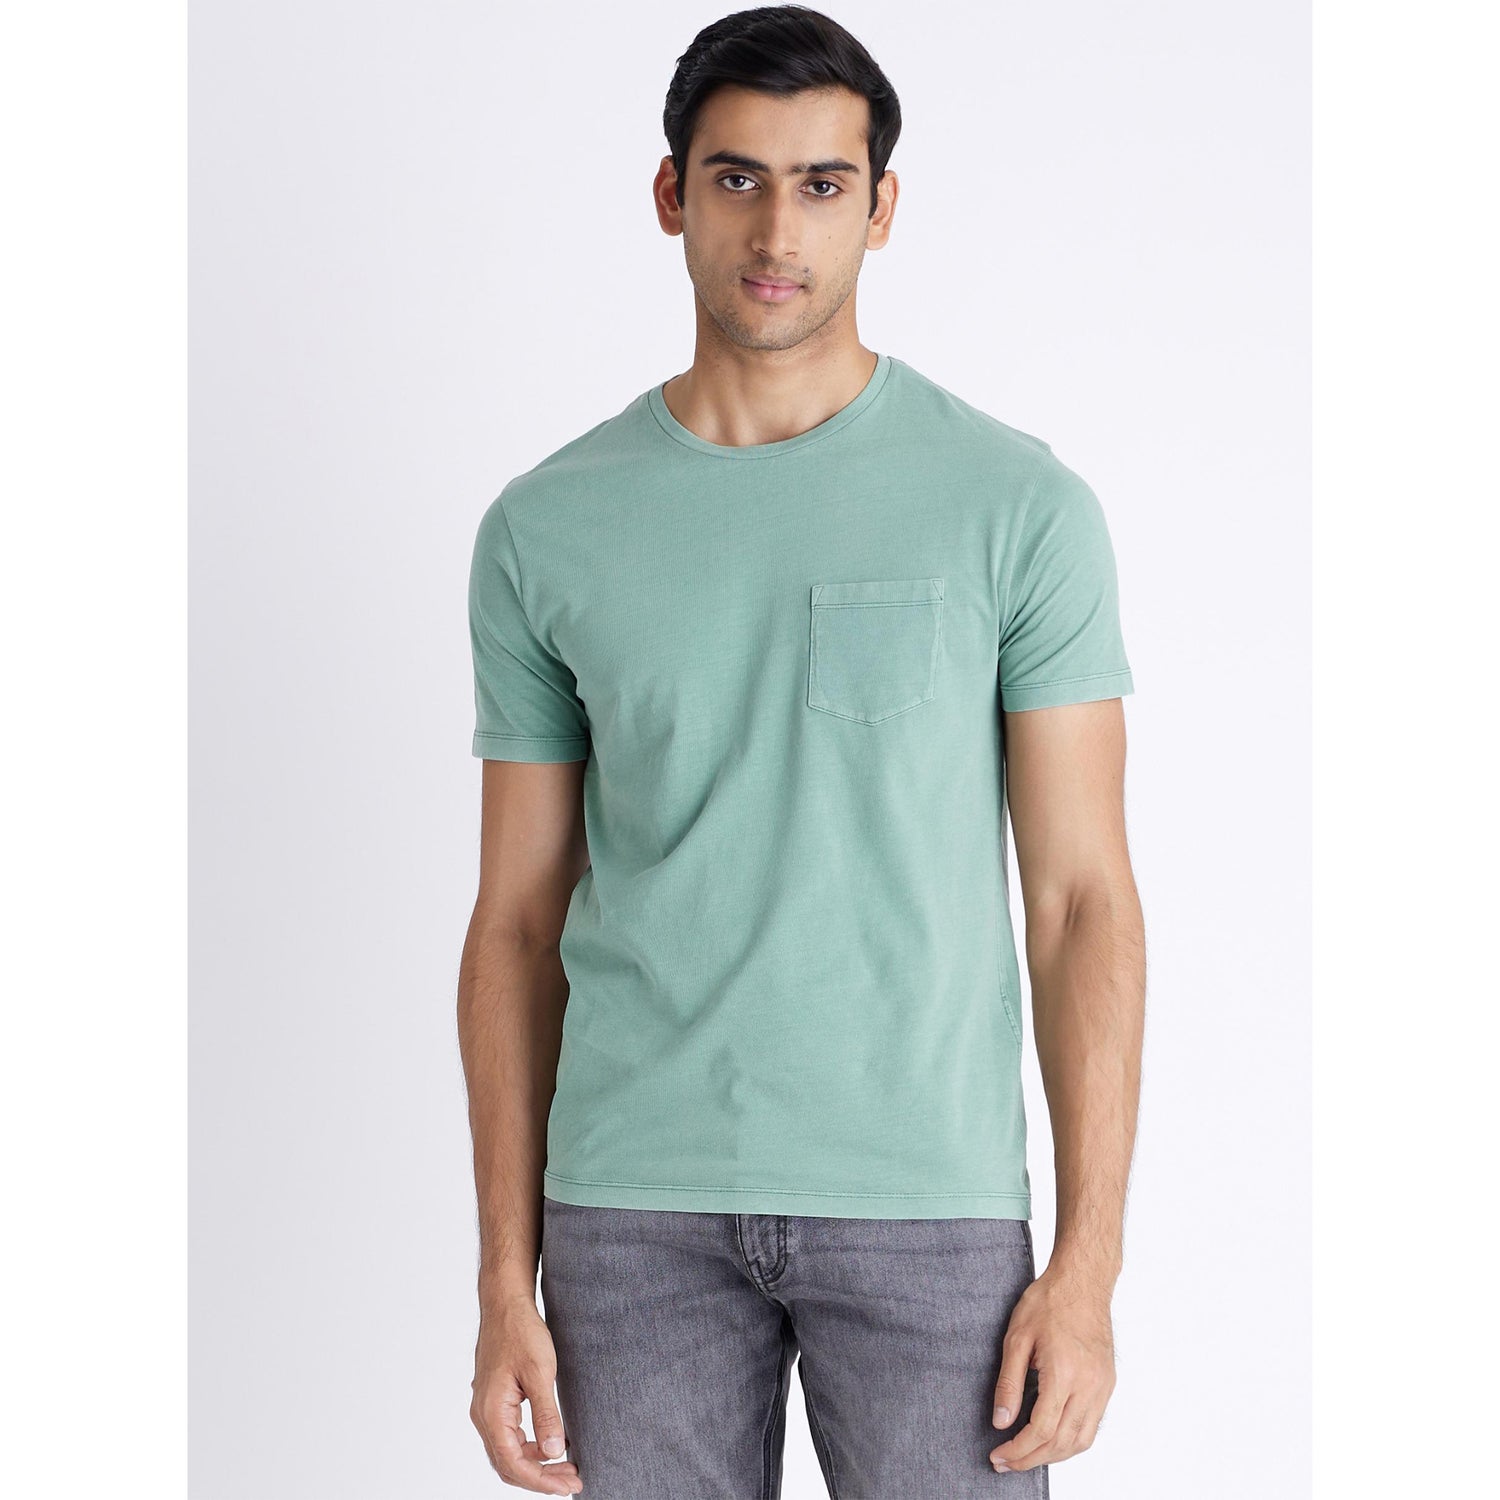 Green Solid Round Neck Pocket Breathable Cotton T-shirt (BEWASHIN)